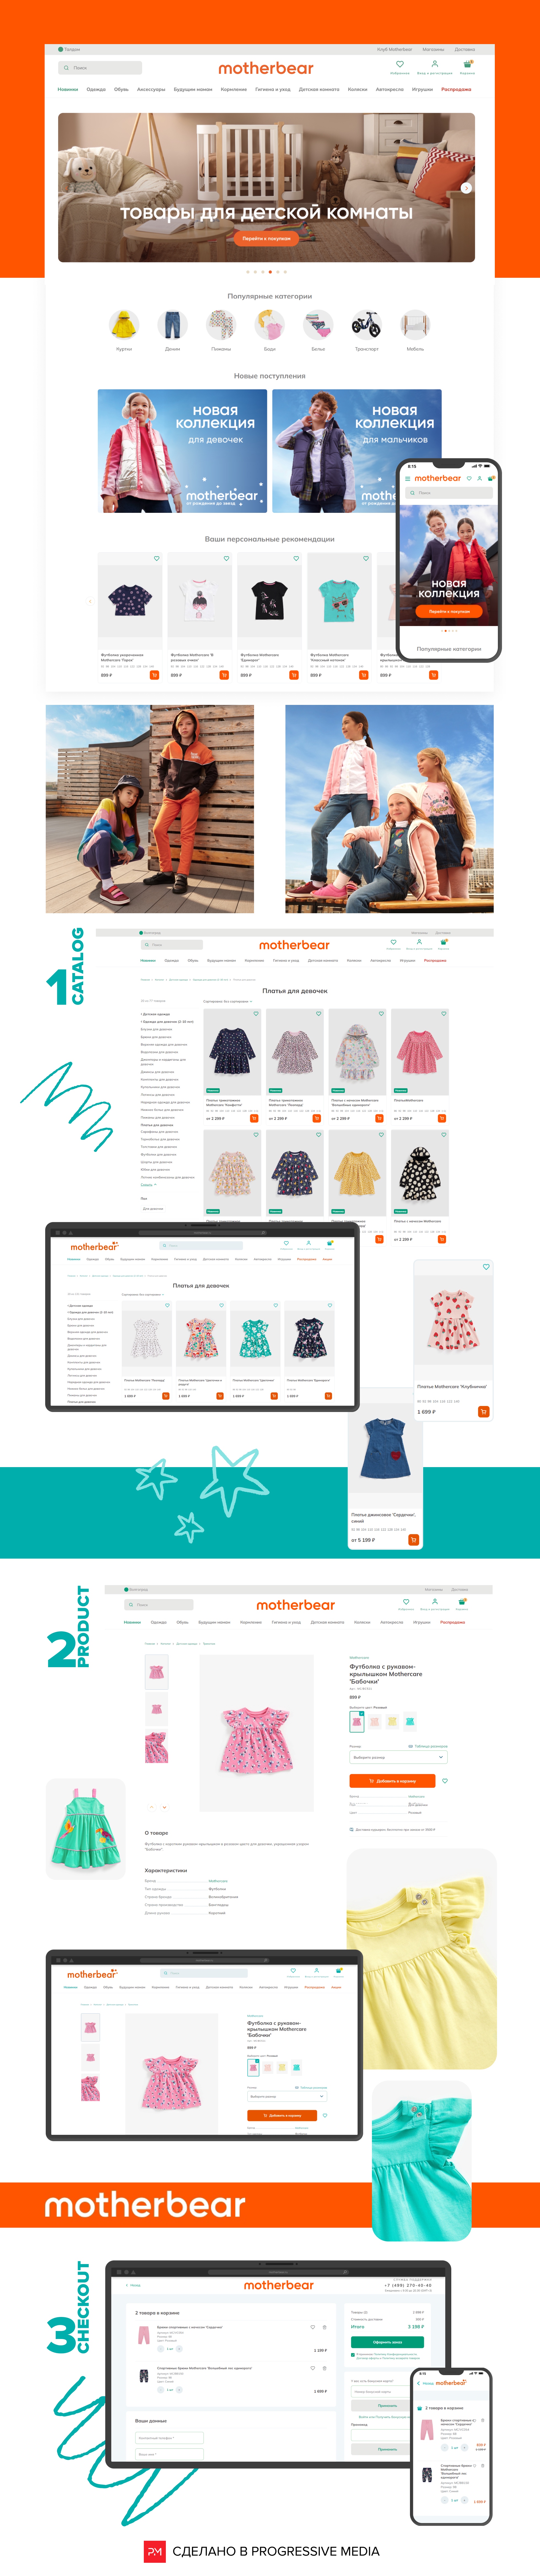 Motherbear MVP интернет-магазина: как запустить e-commerce проект за 1 месяц